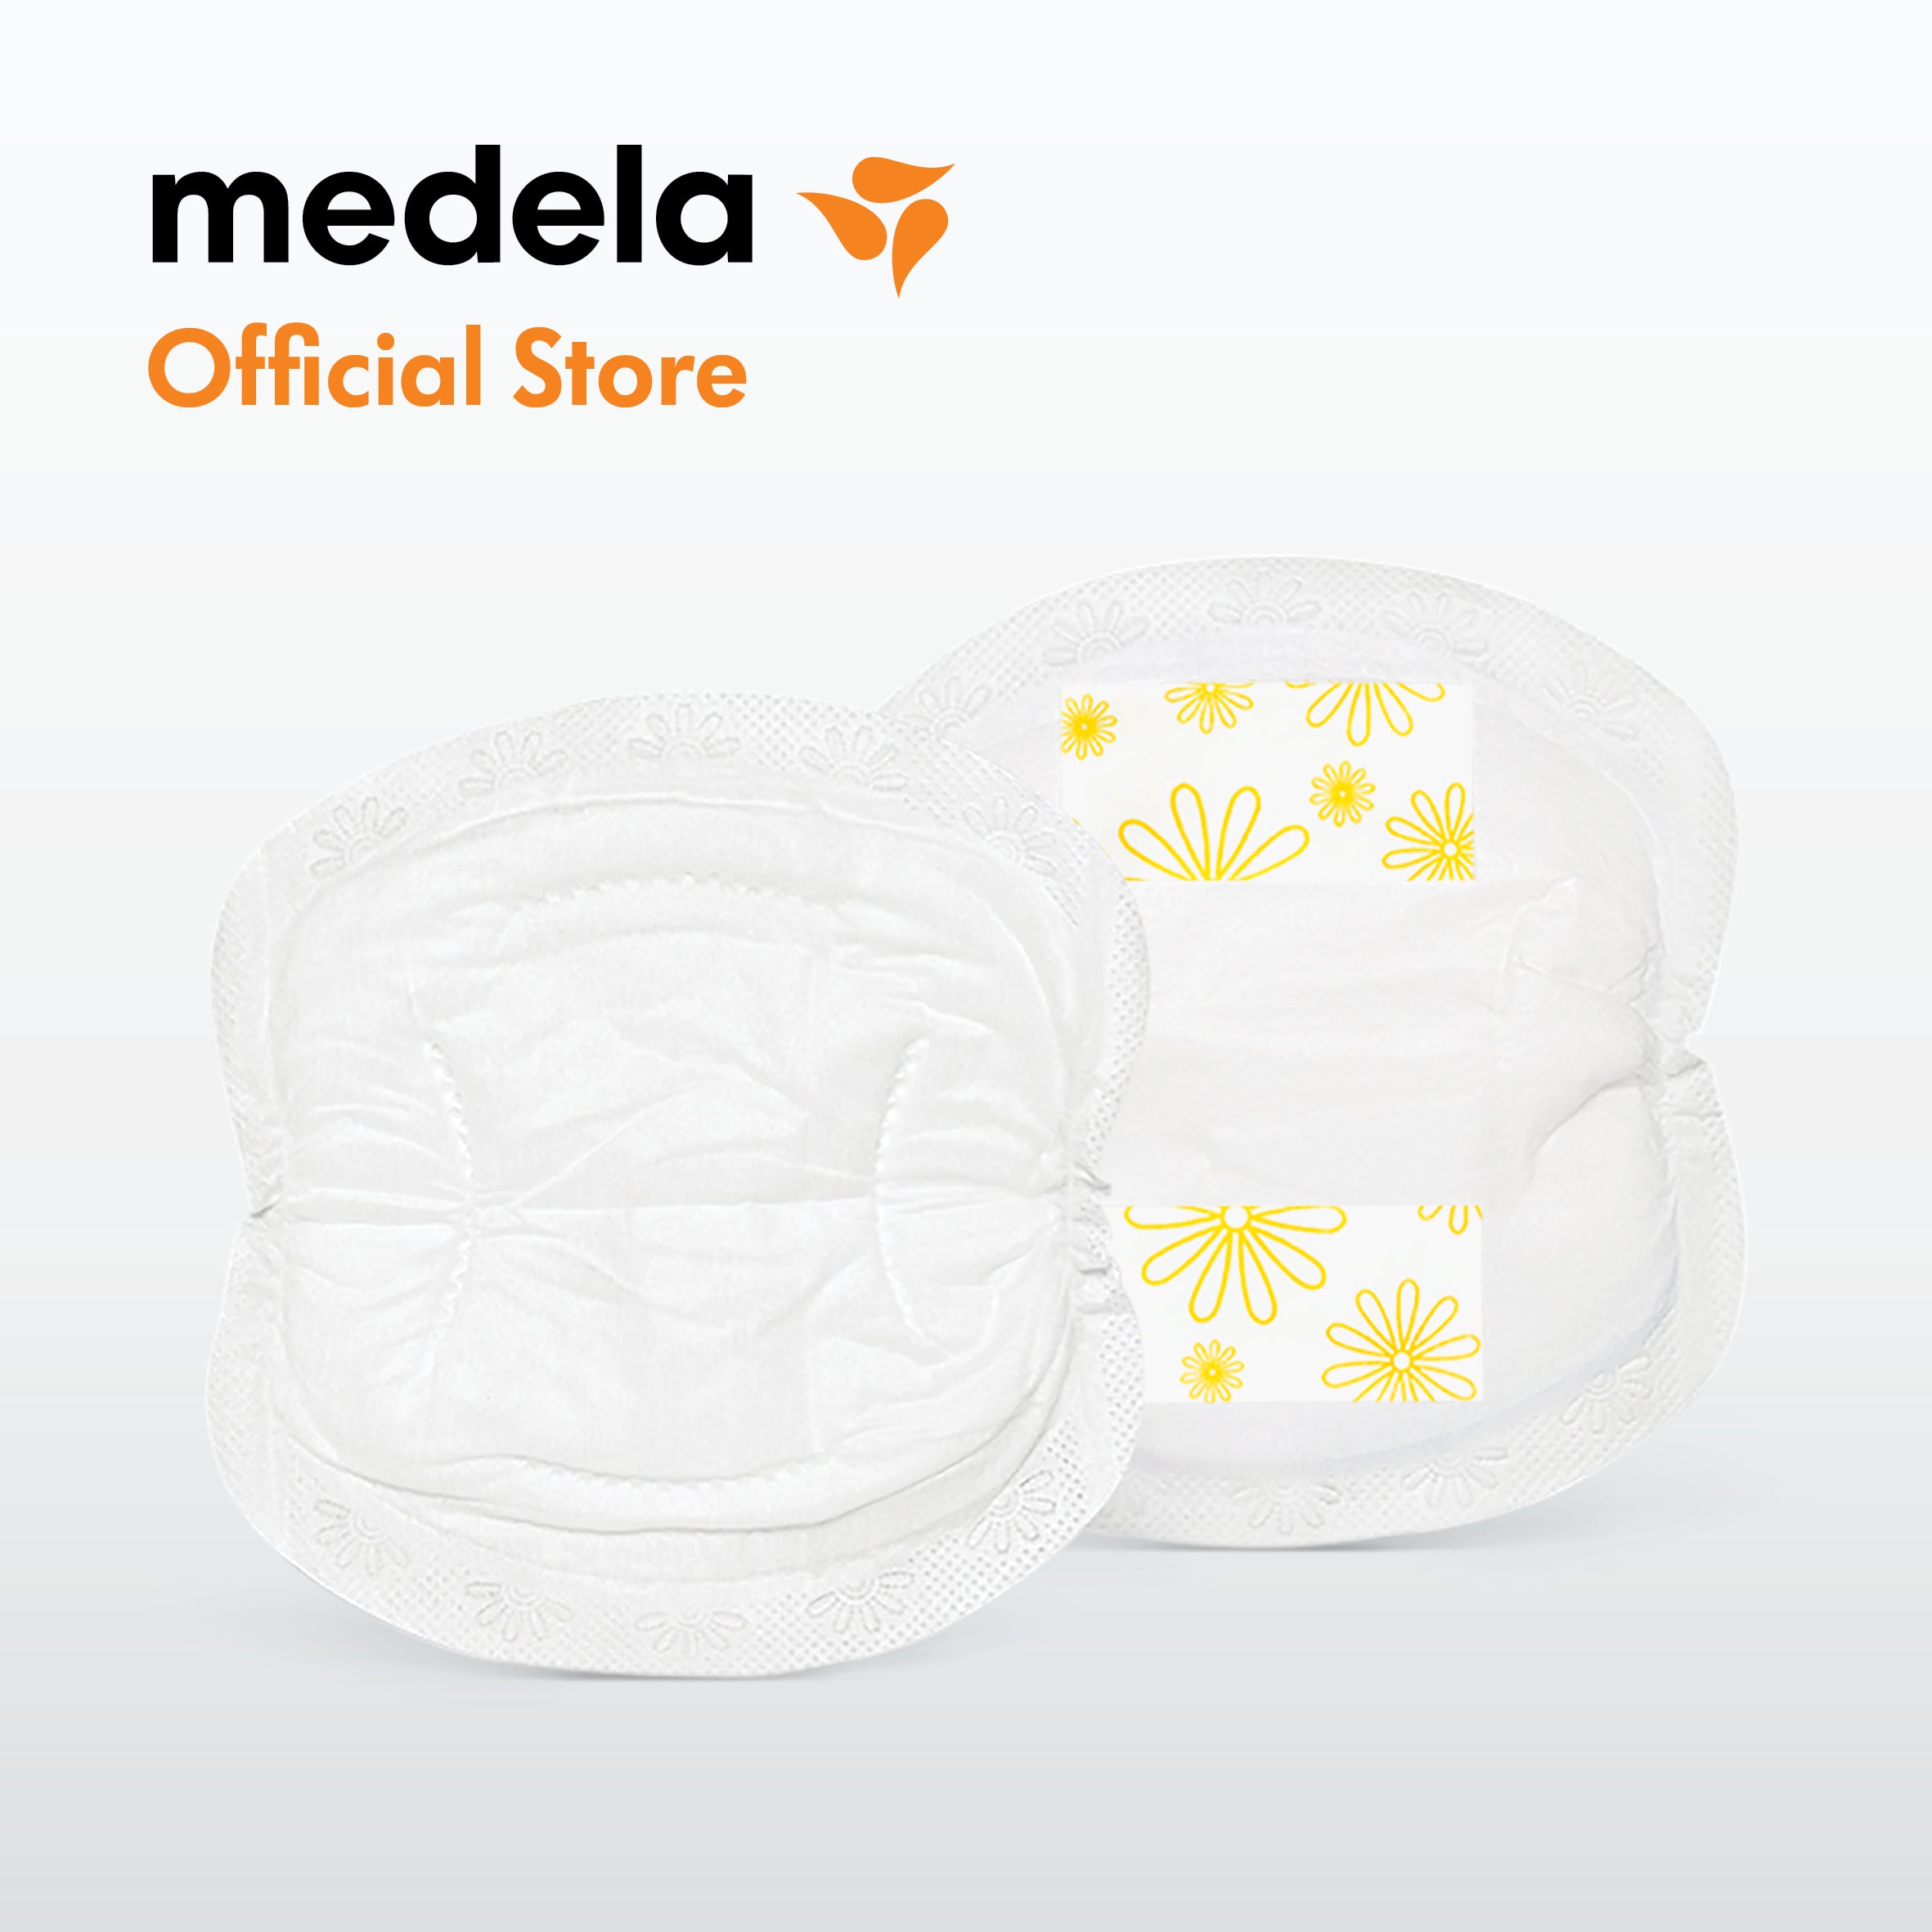 Medela Disposable Nursing Pads 60s - DoctorOnCall Farmasi Online